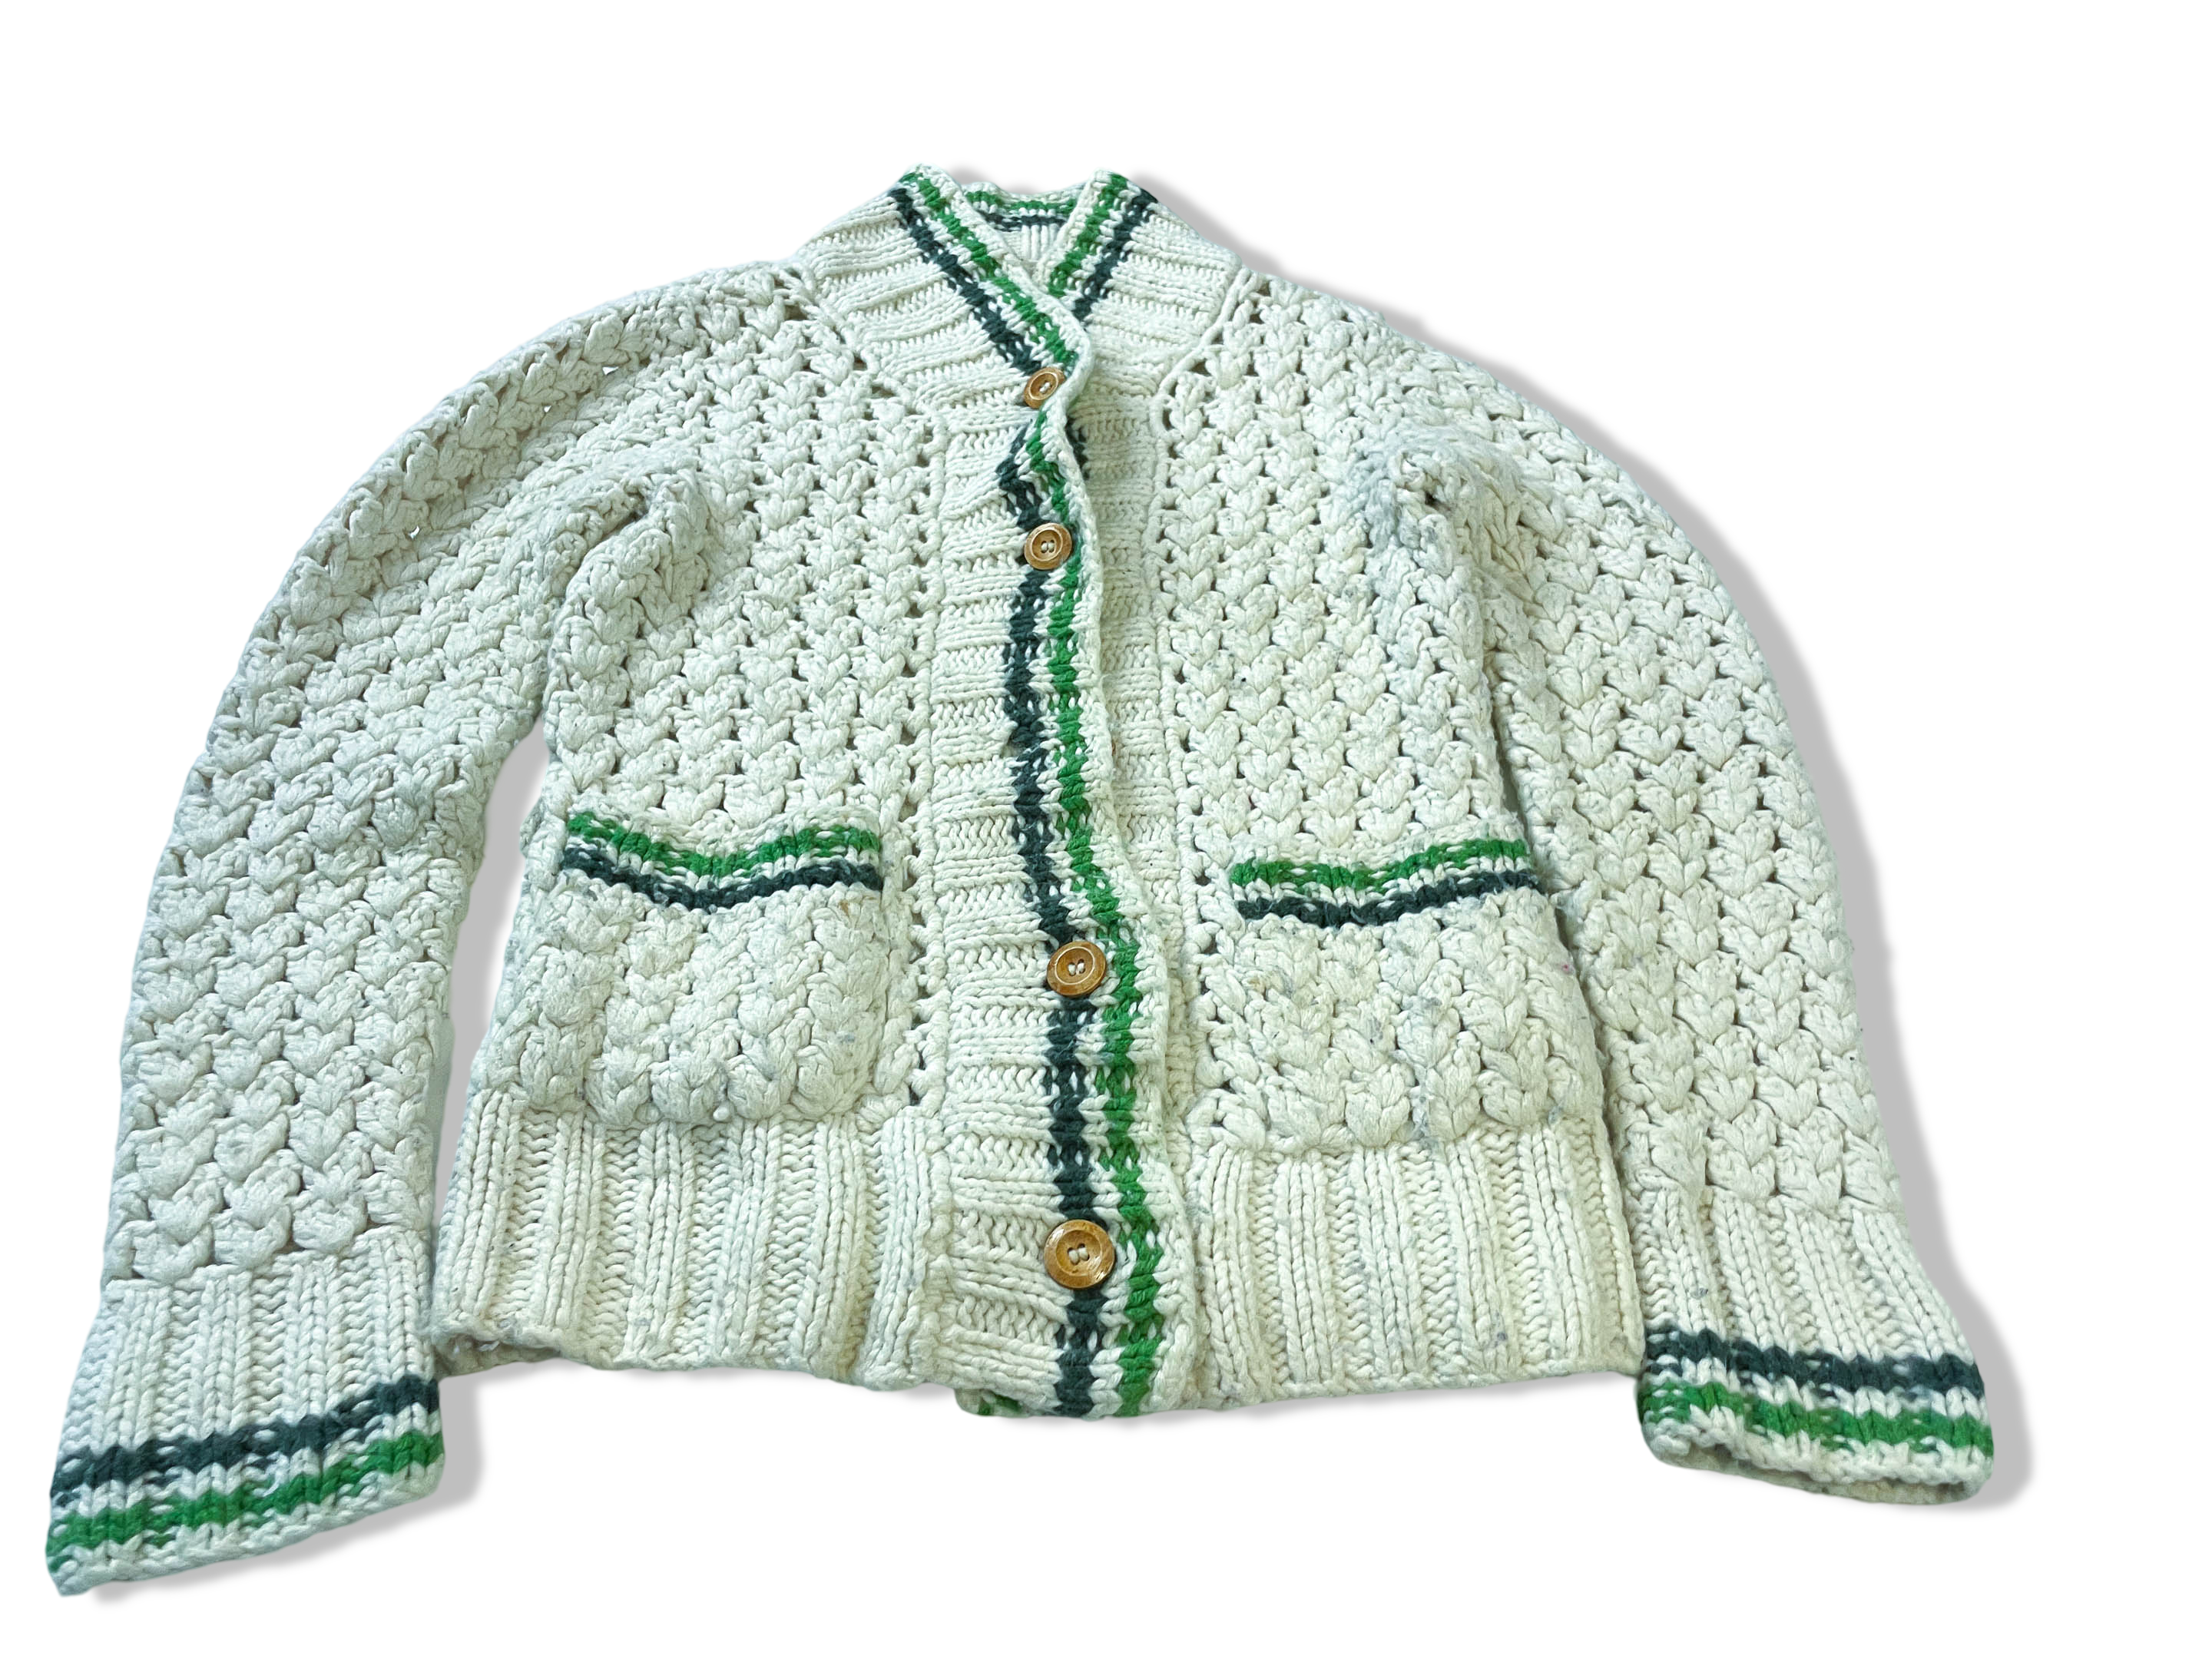 Vintage Women's cream merino wool knitted mock neck button up cardigan size 8|L27W21|SKU 3985